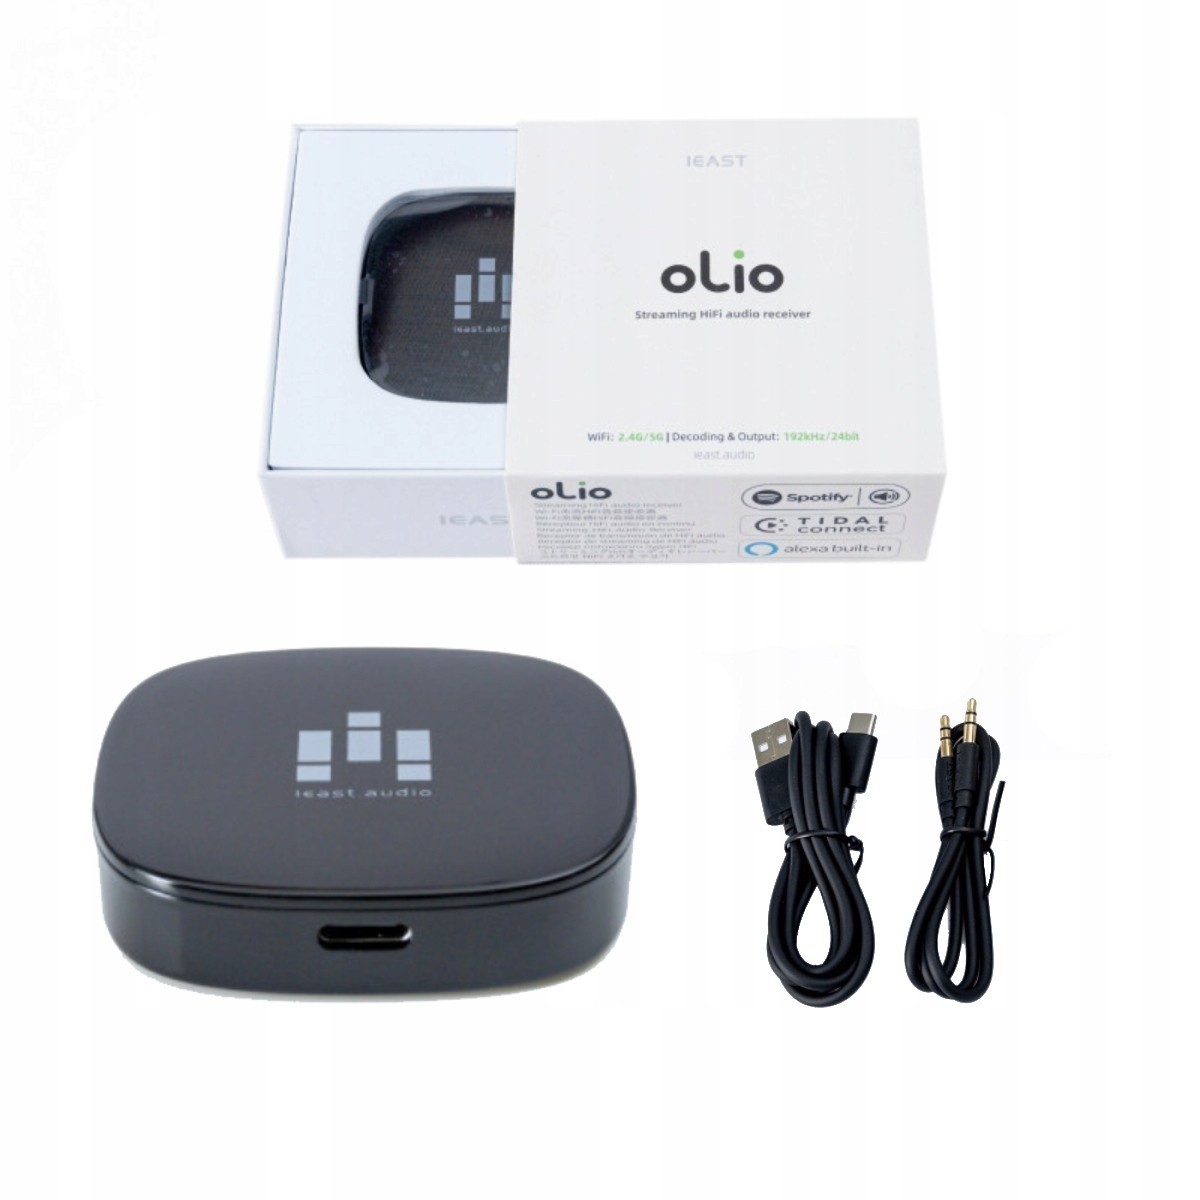 IEAST Olio Streaming HİFİ Auodio Receiver | Olio-1 | 